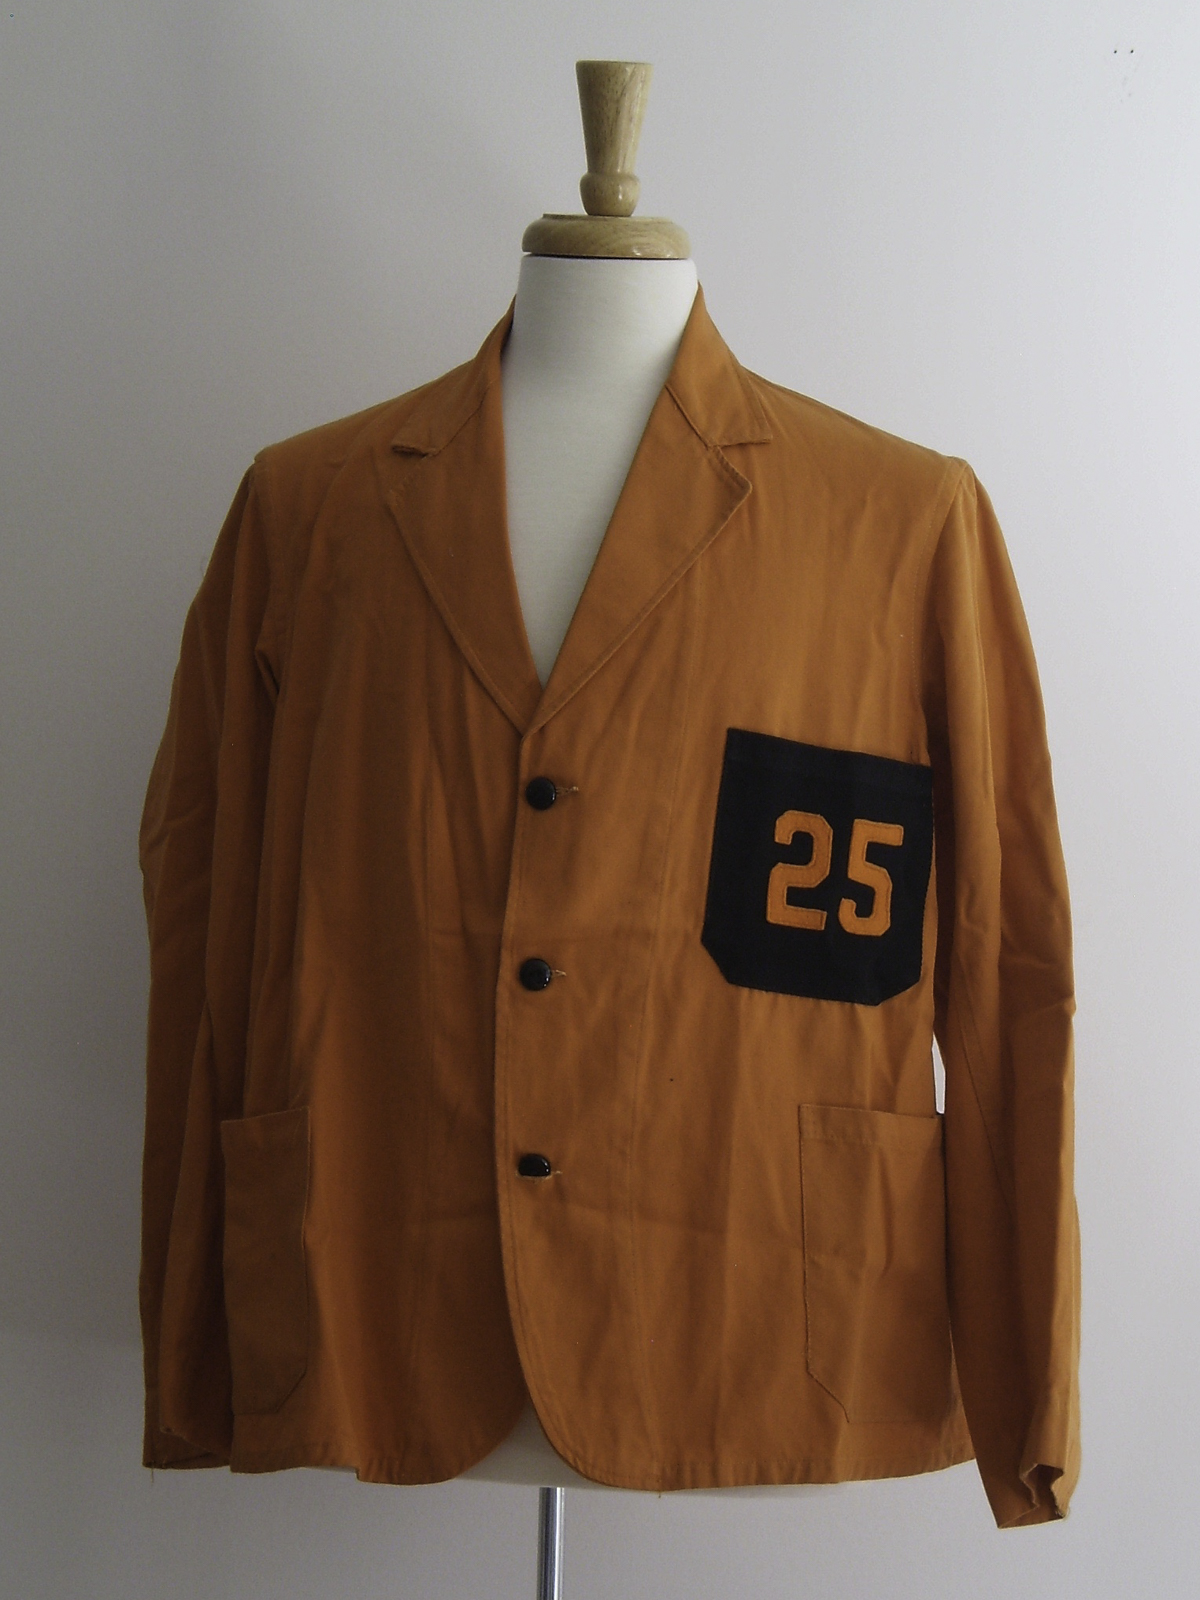 Reunion Jacket 1925 Variation 3 Front